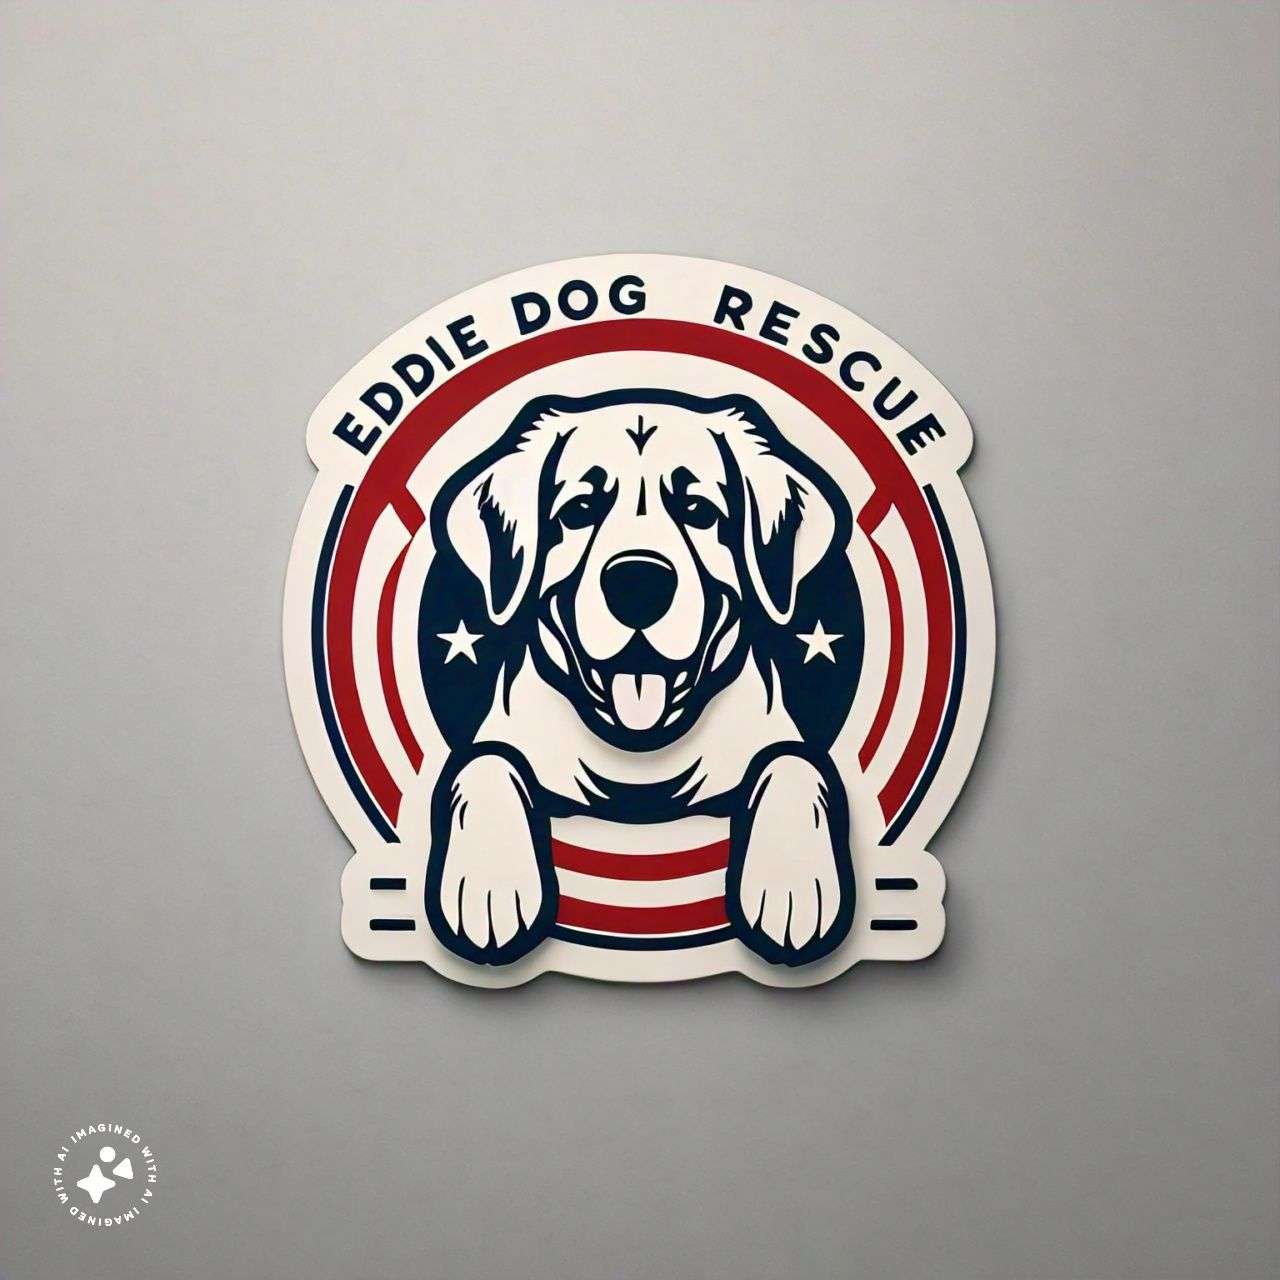 Eddie Dog Rescue logo